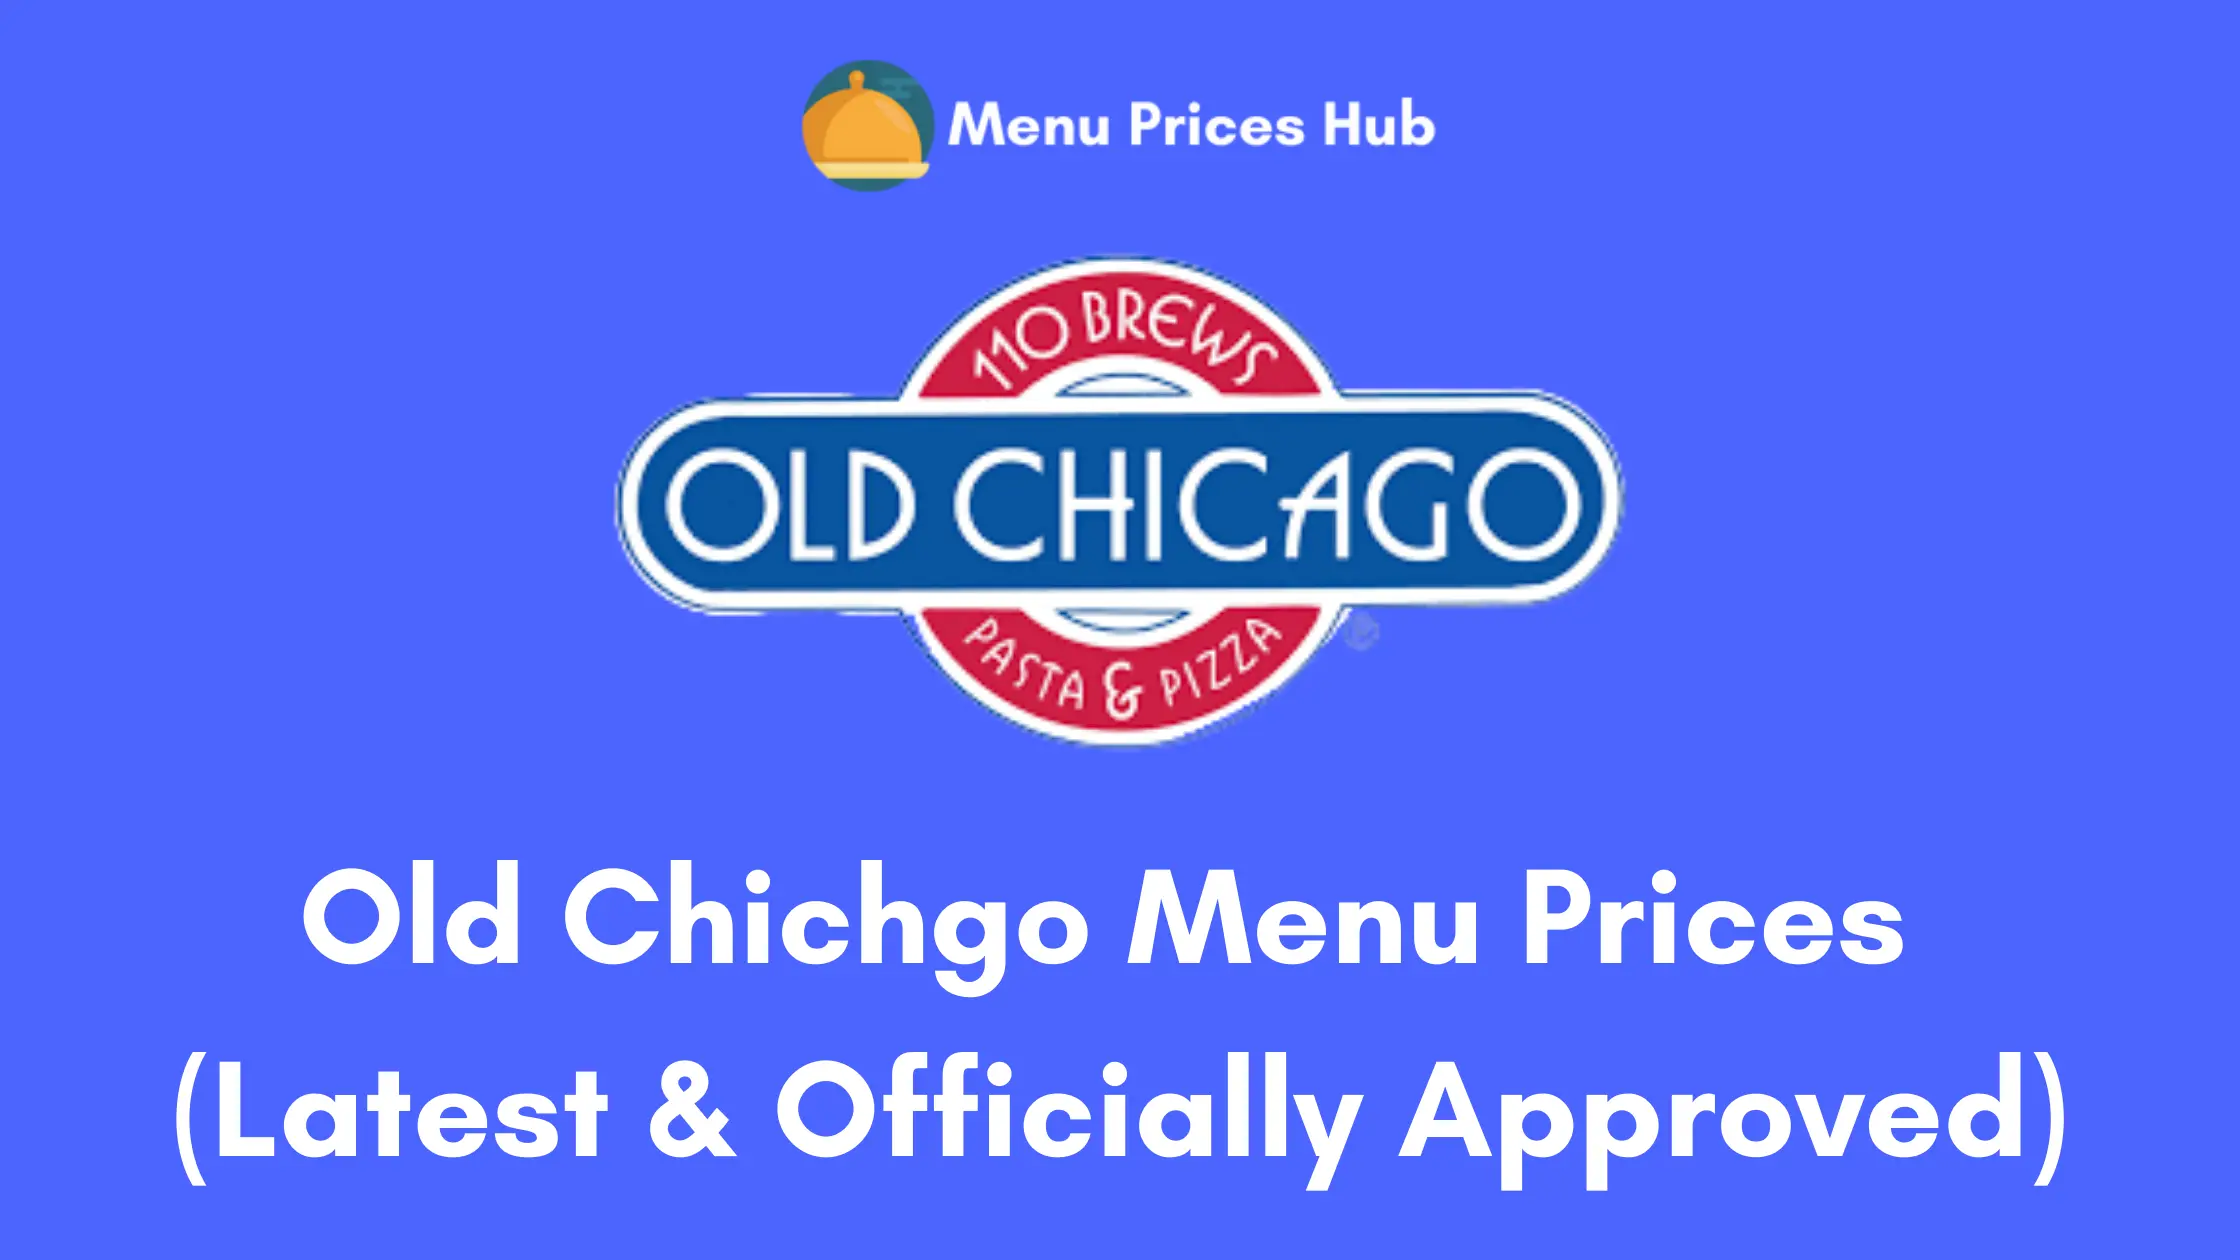 Old Chicago Menu Prices